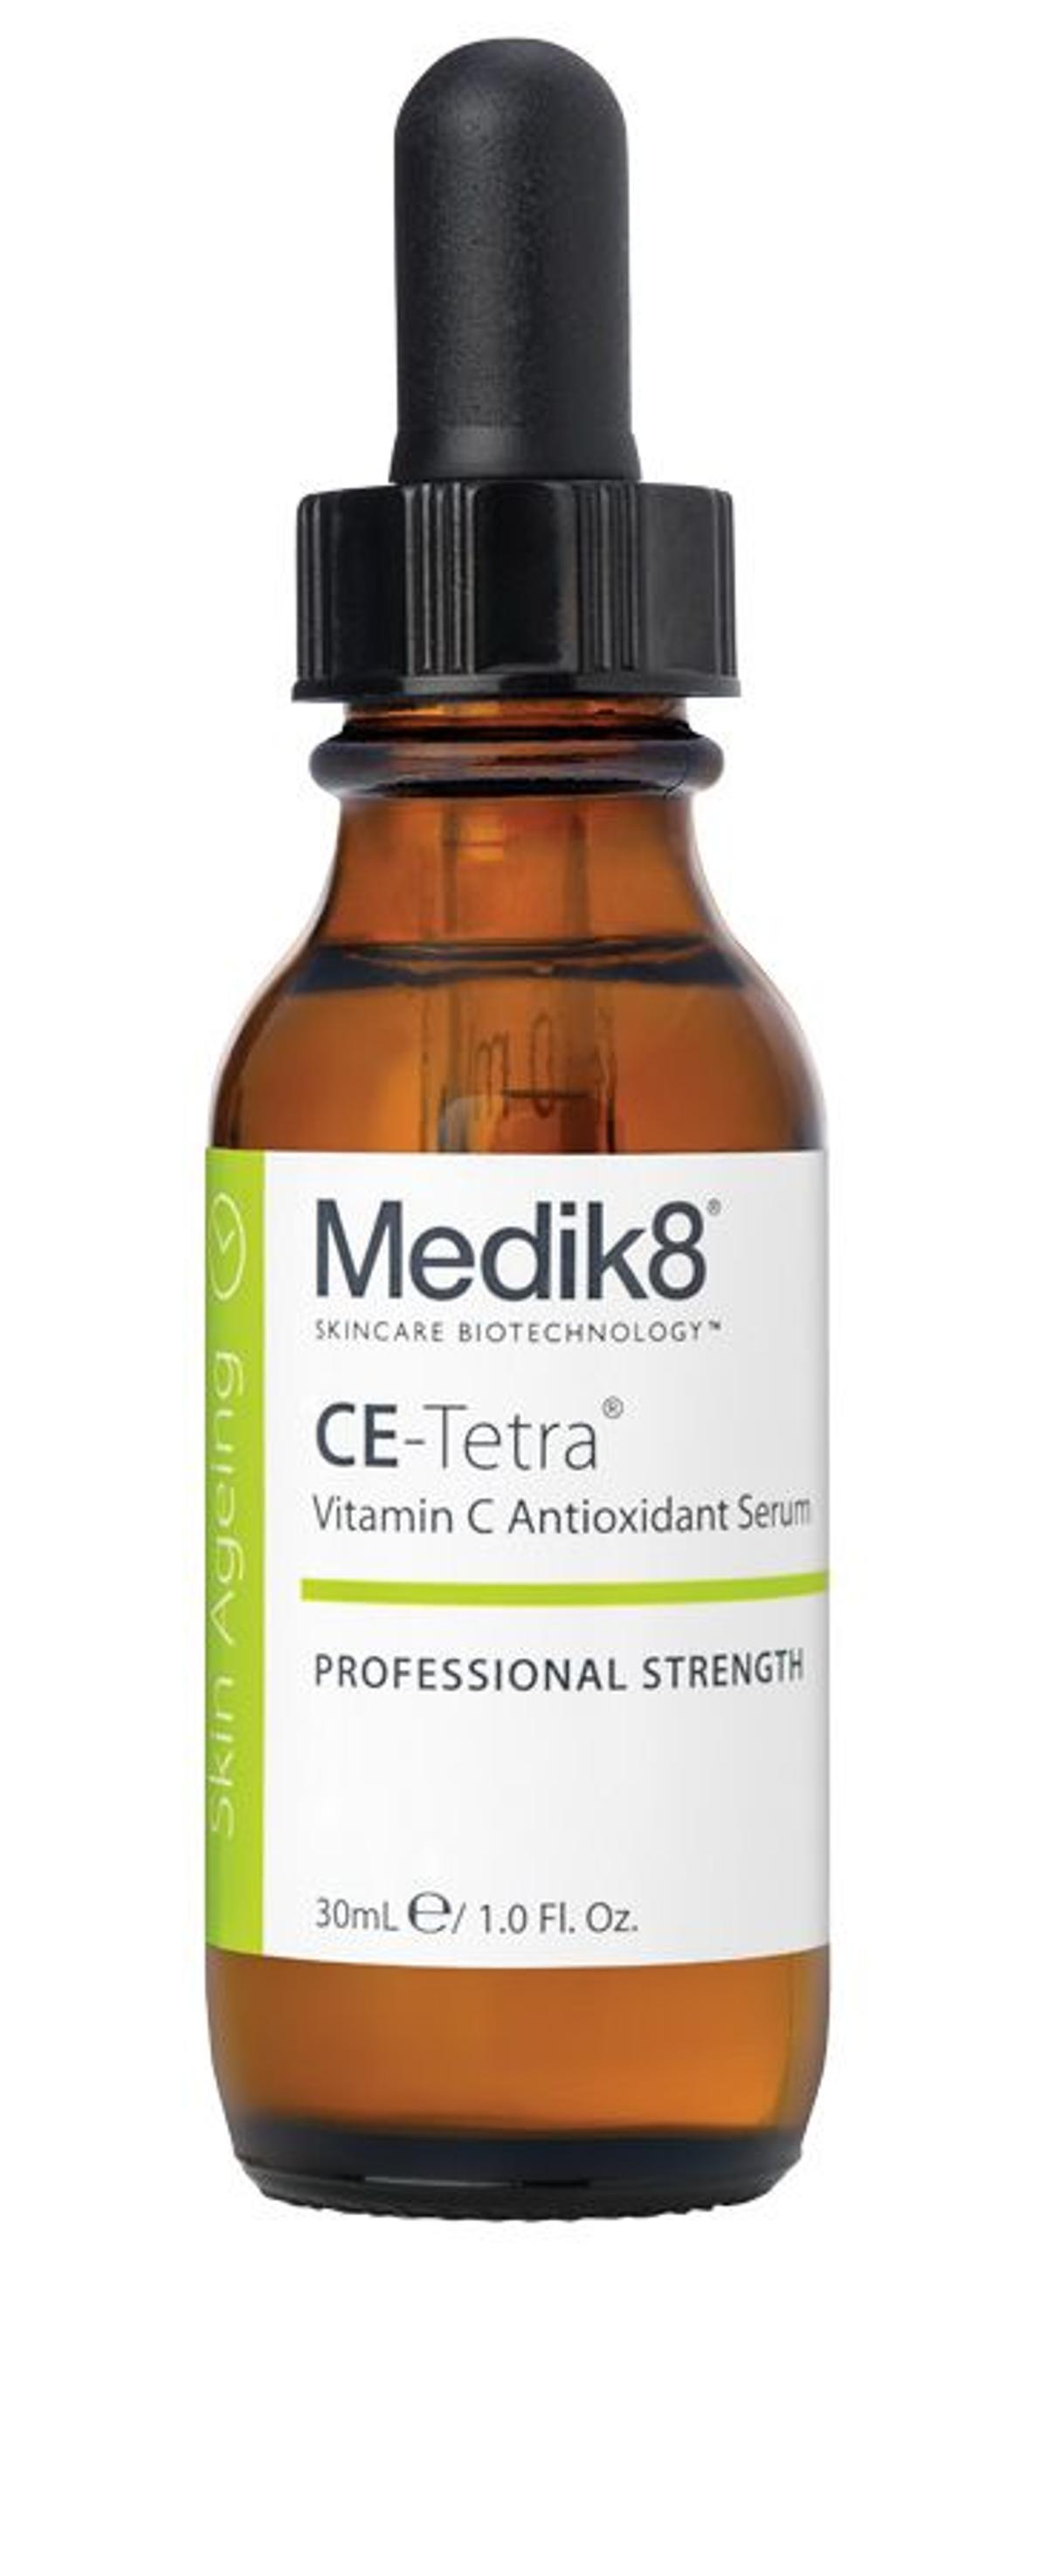 CE-Tetra, Medik8